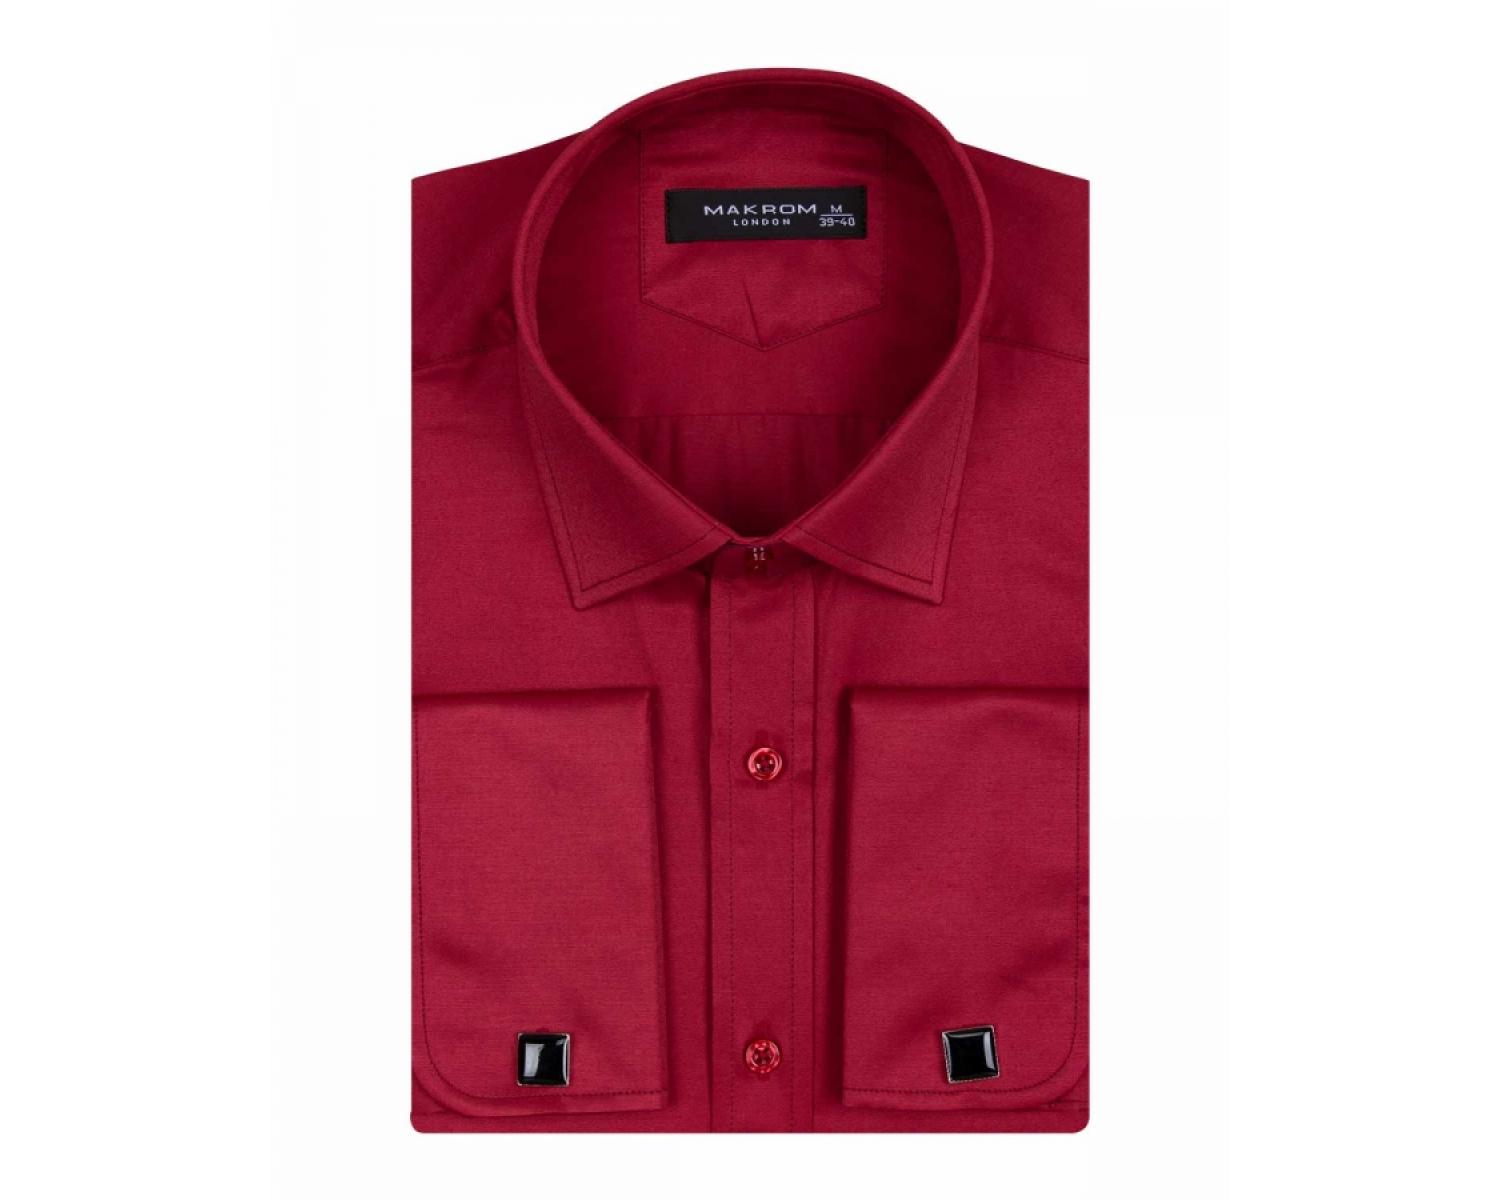 SL 1045-C Men's claret red plain double cuff shirt with cufflinks ...